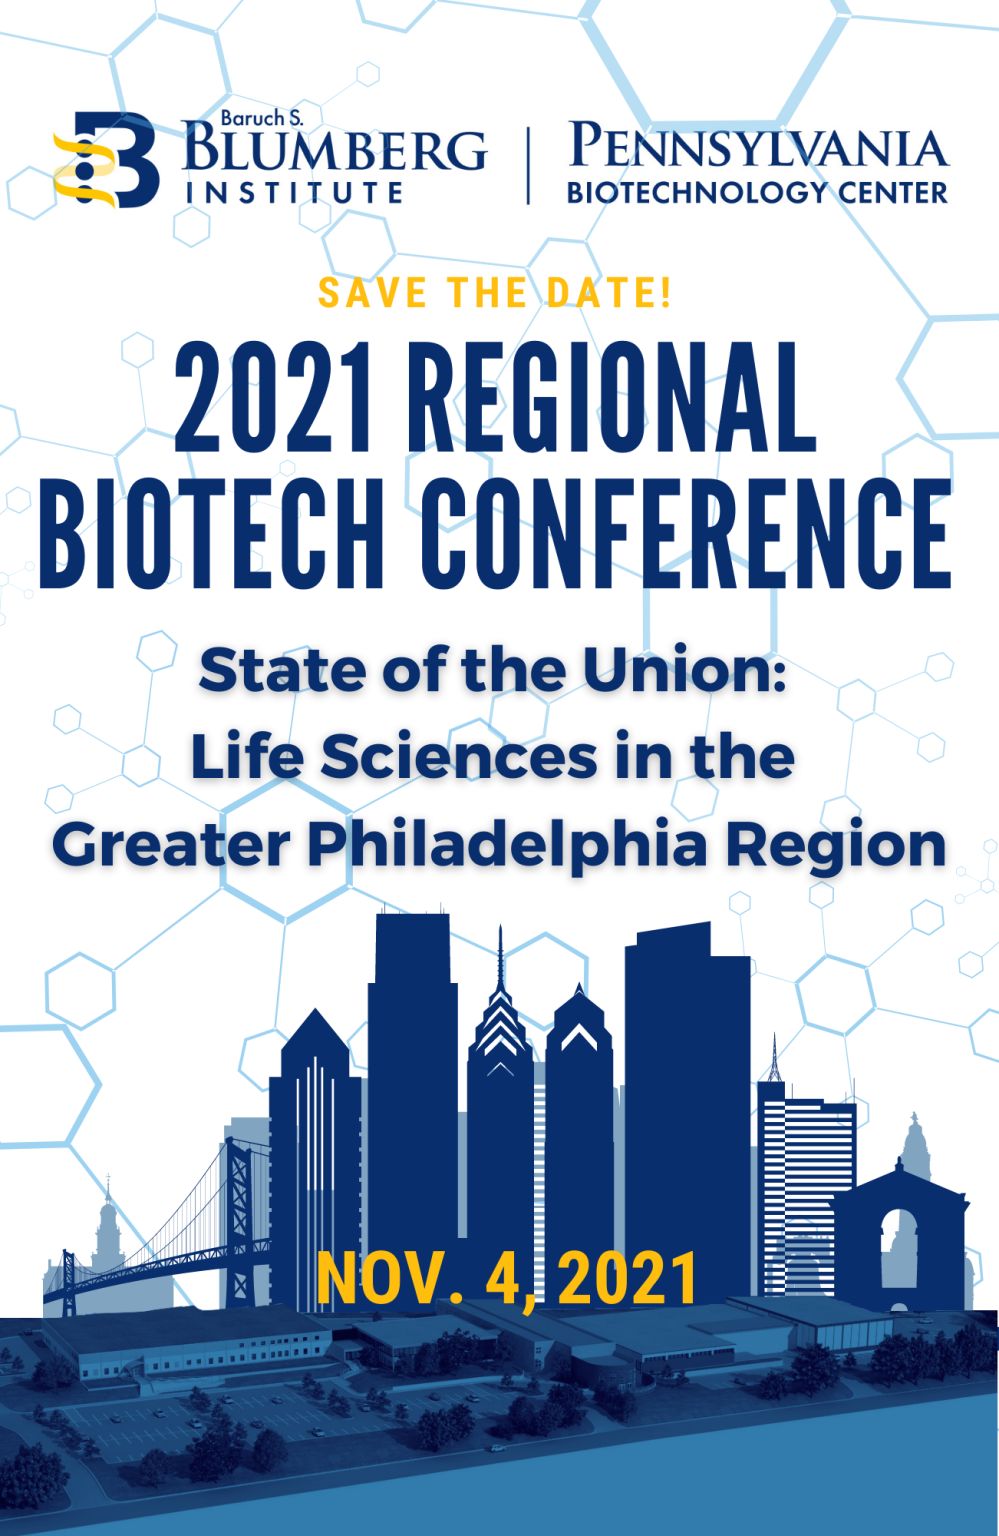 Pennsylvania Biotechnology Center on LinkedIn biotechnology lifesciences